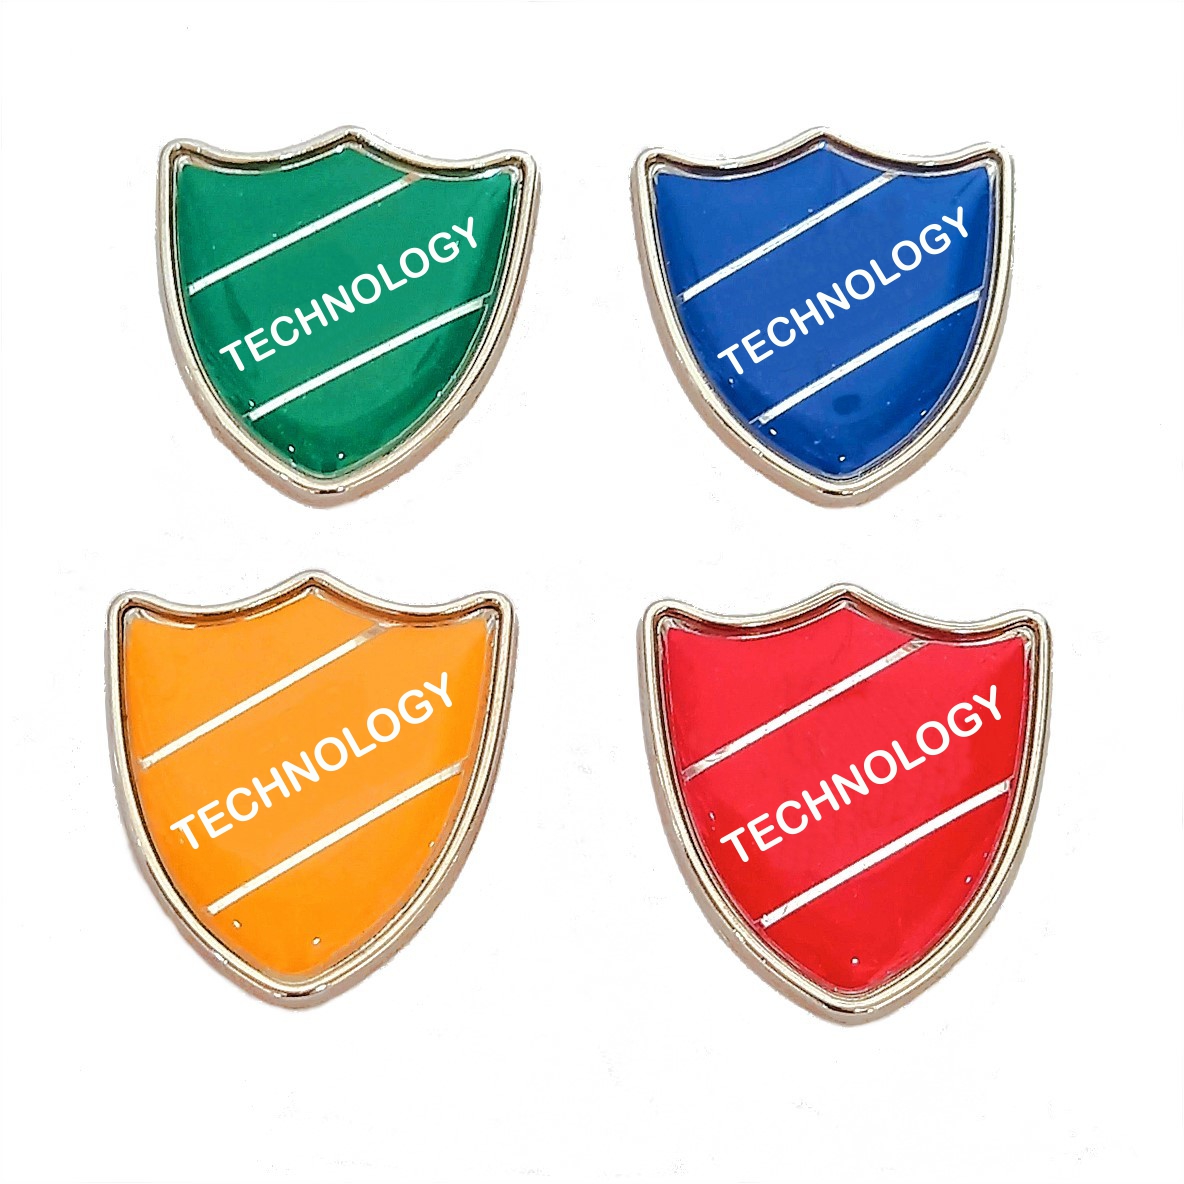 TECHNOLOGY shield badge